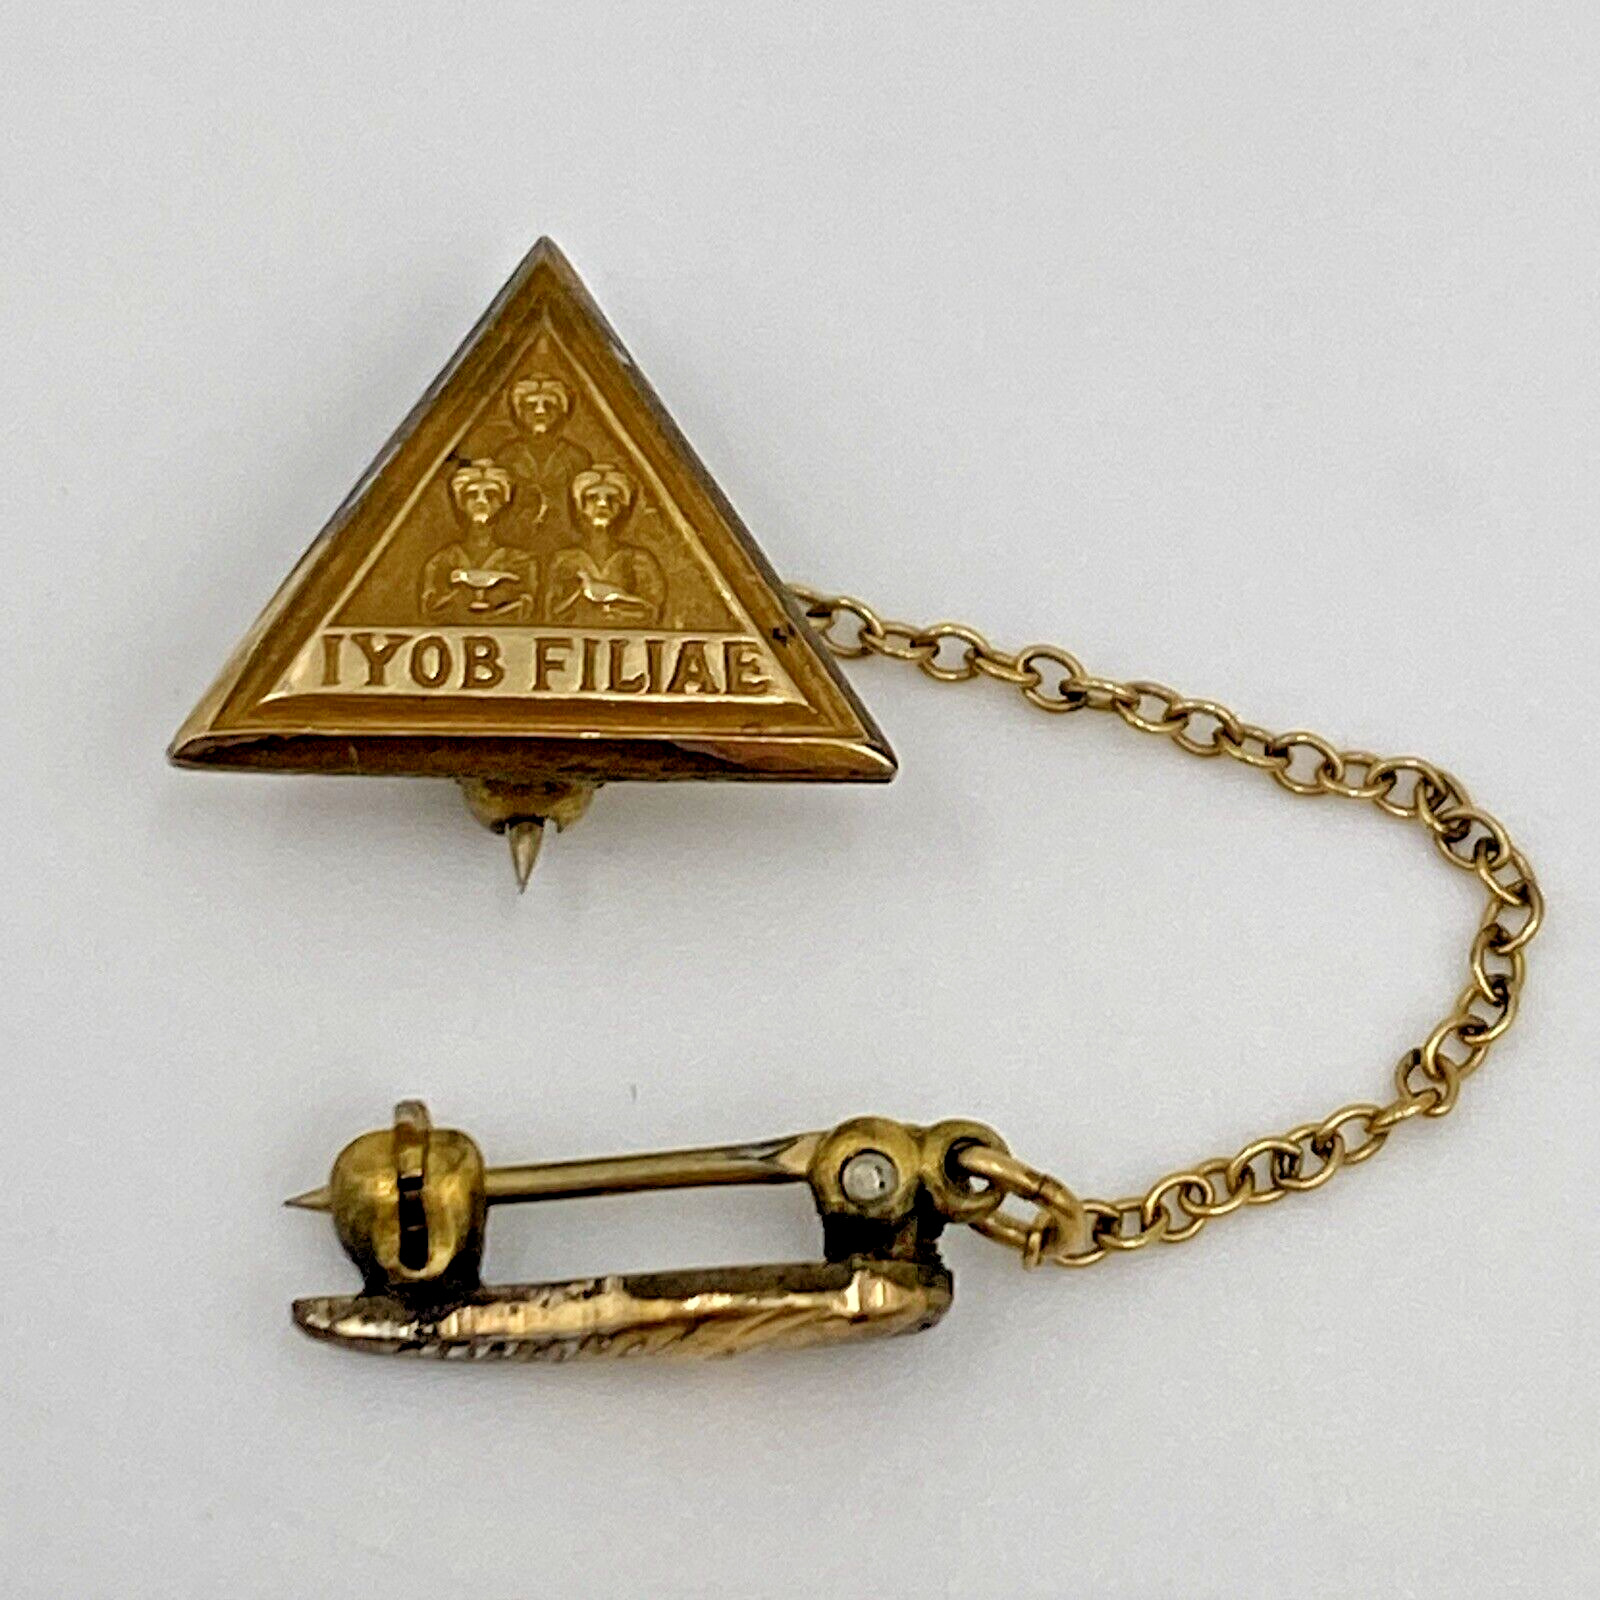 Job's Daughters Vintage GF Lapel Pin - IYOB  Filiae Masonic Member Badge